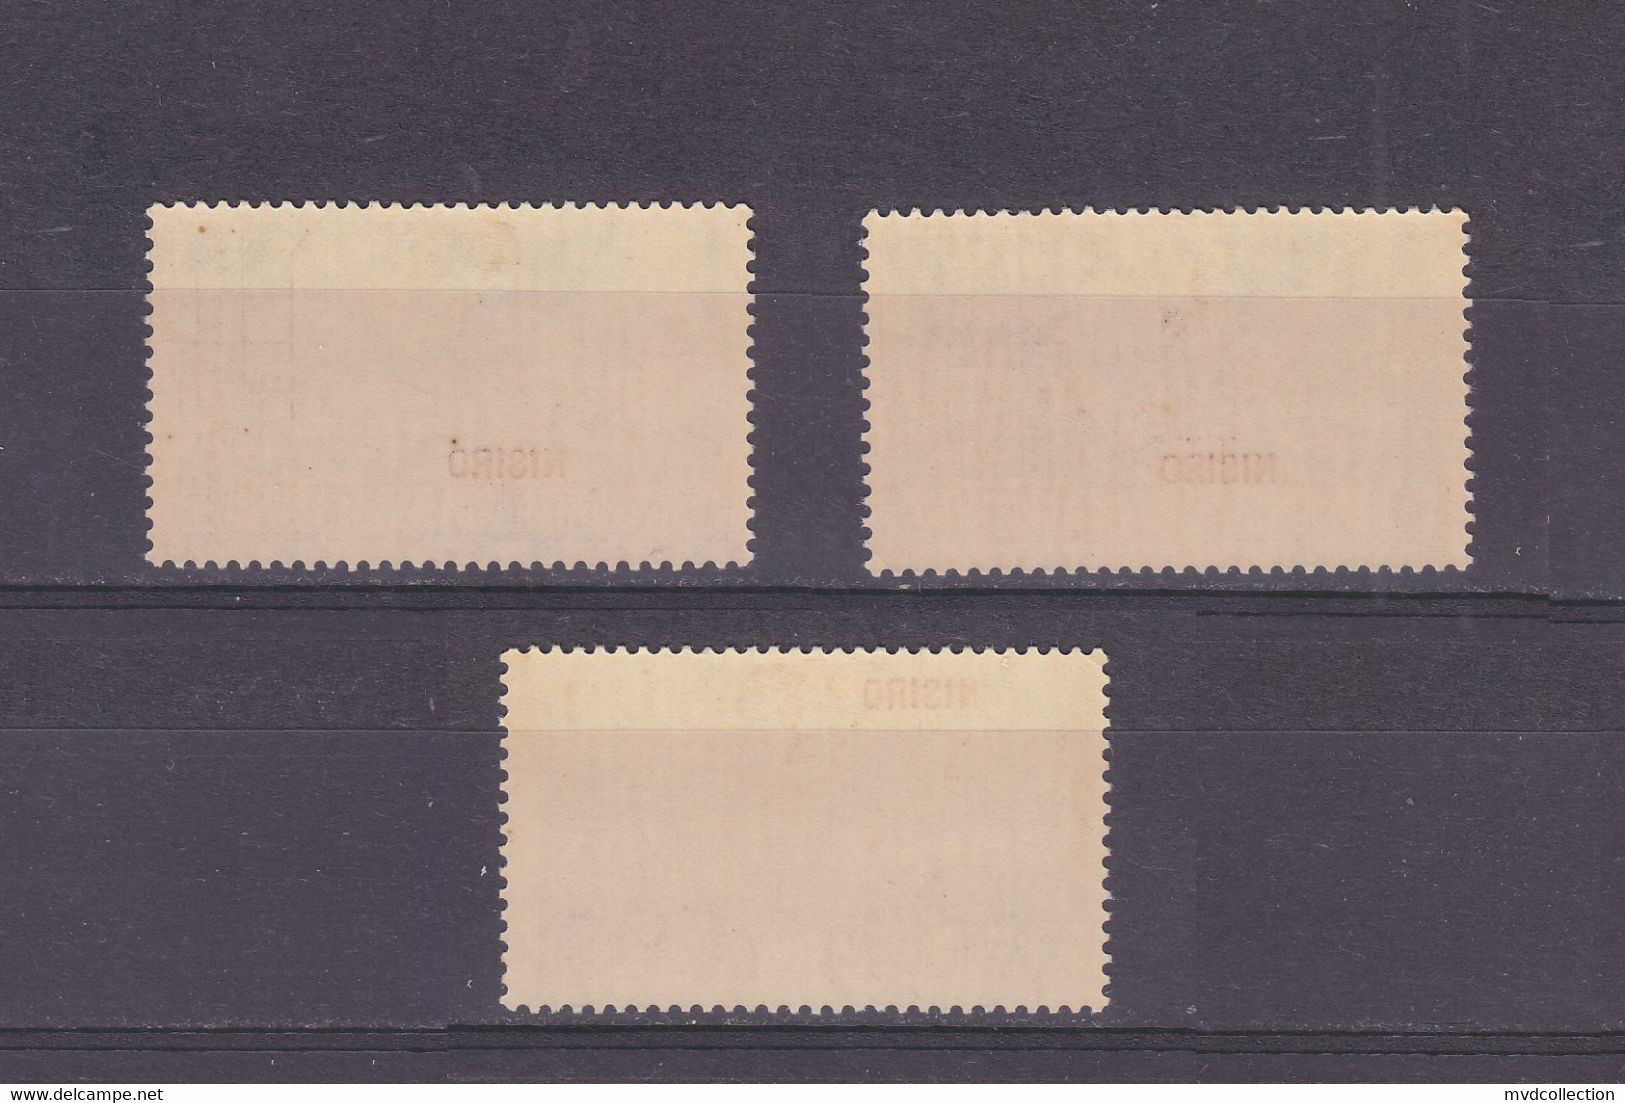 ITALY Lot CENTENARIO FERRUCCI Stamps Overprinted NISIRO 1930 VF MH Original Gum - Egeo (Nisiro)